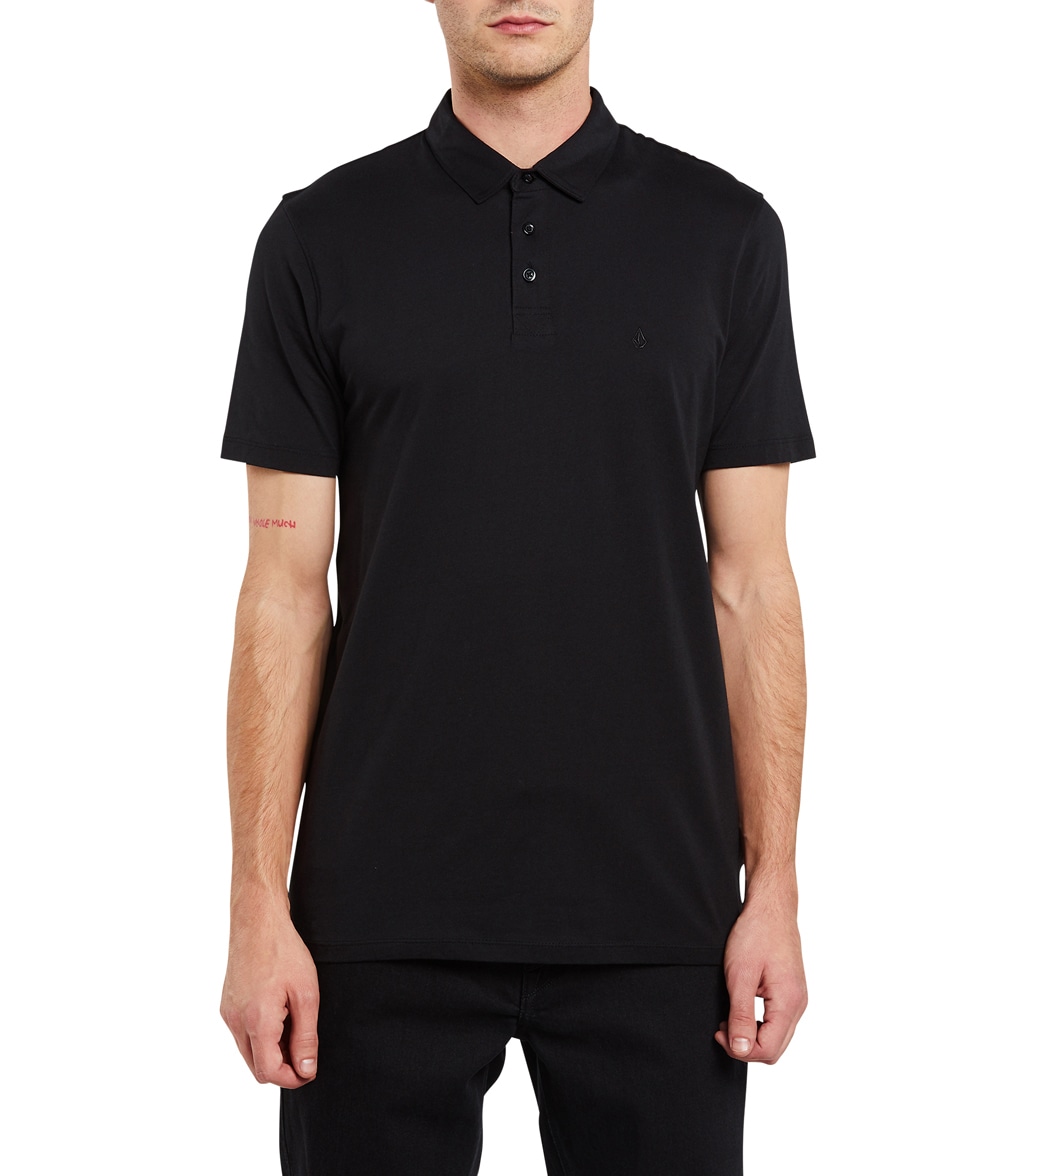 Volcom Men's Wowzer Short Sleeve Polo Shirt - Black Large Cotton/Polyester - Swimoutlet.com